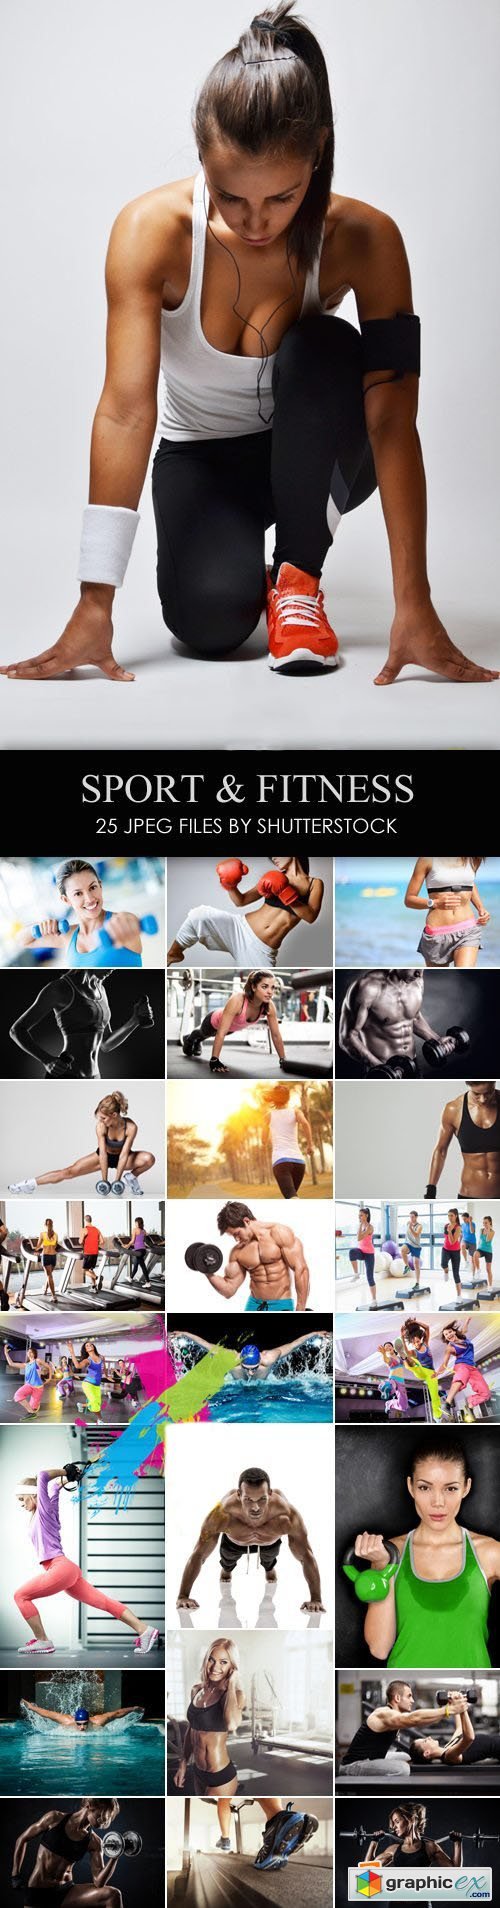 Stock Photo - Sport & Fitness